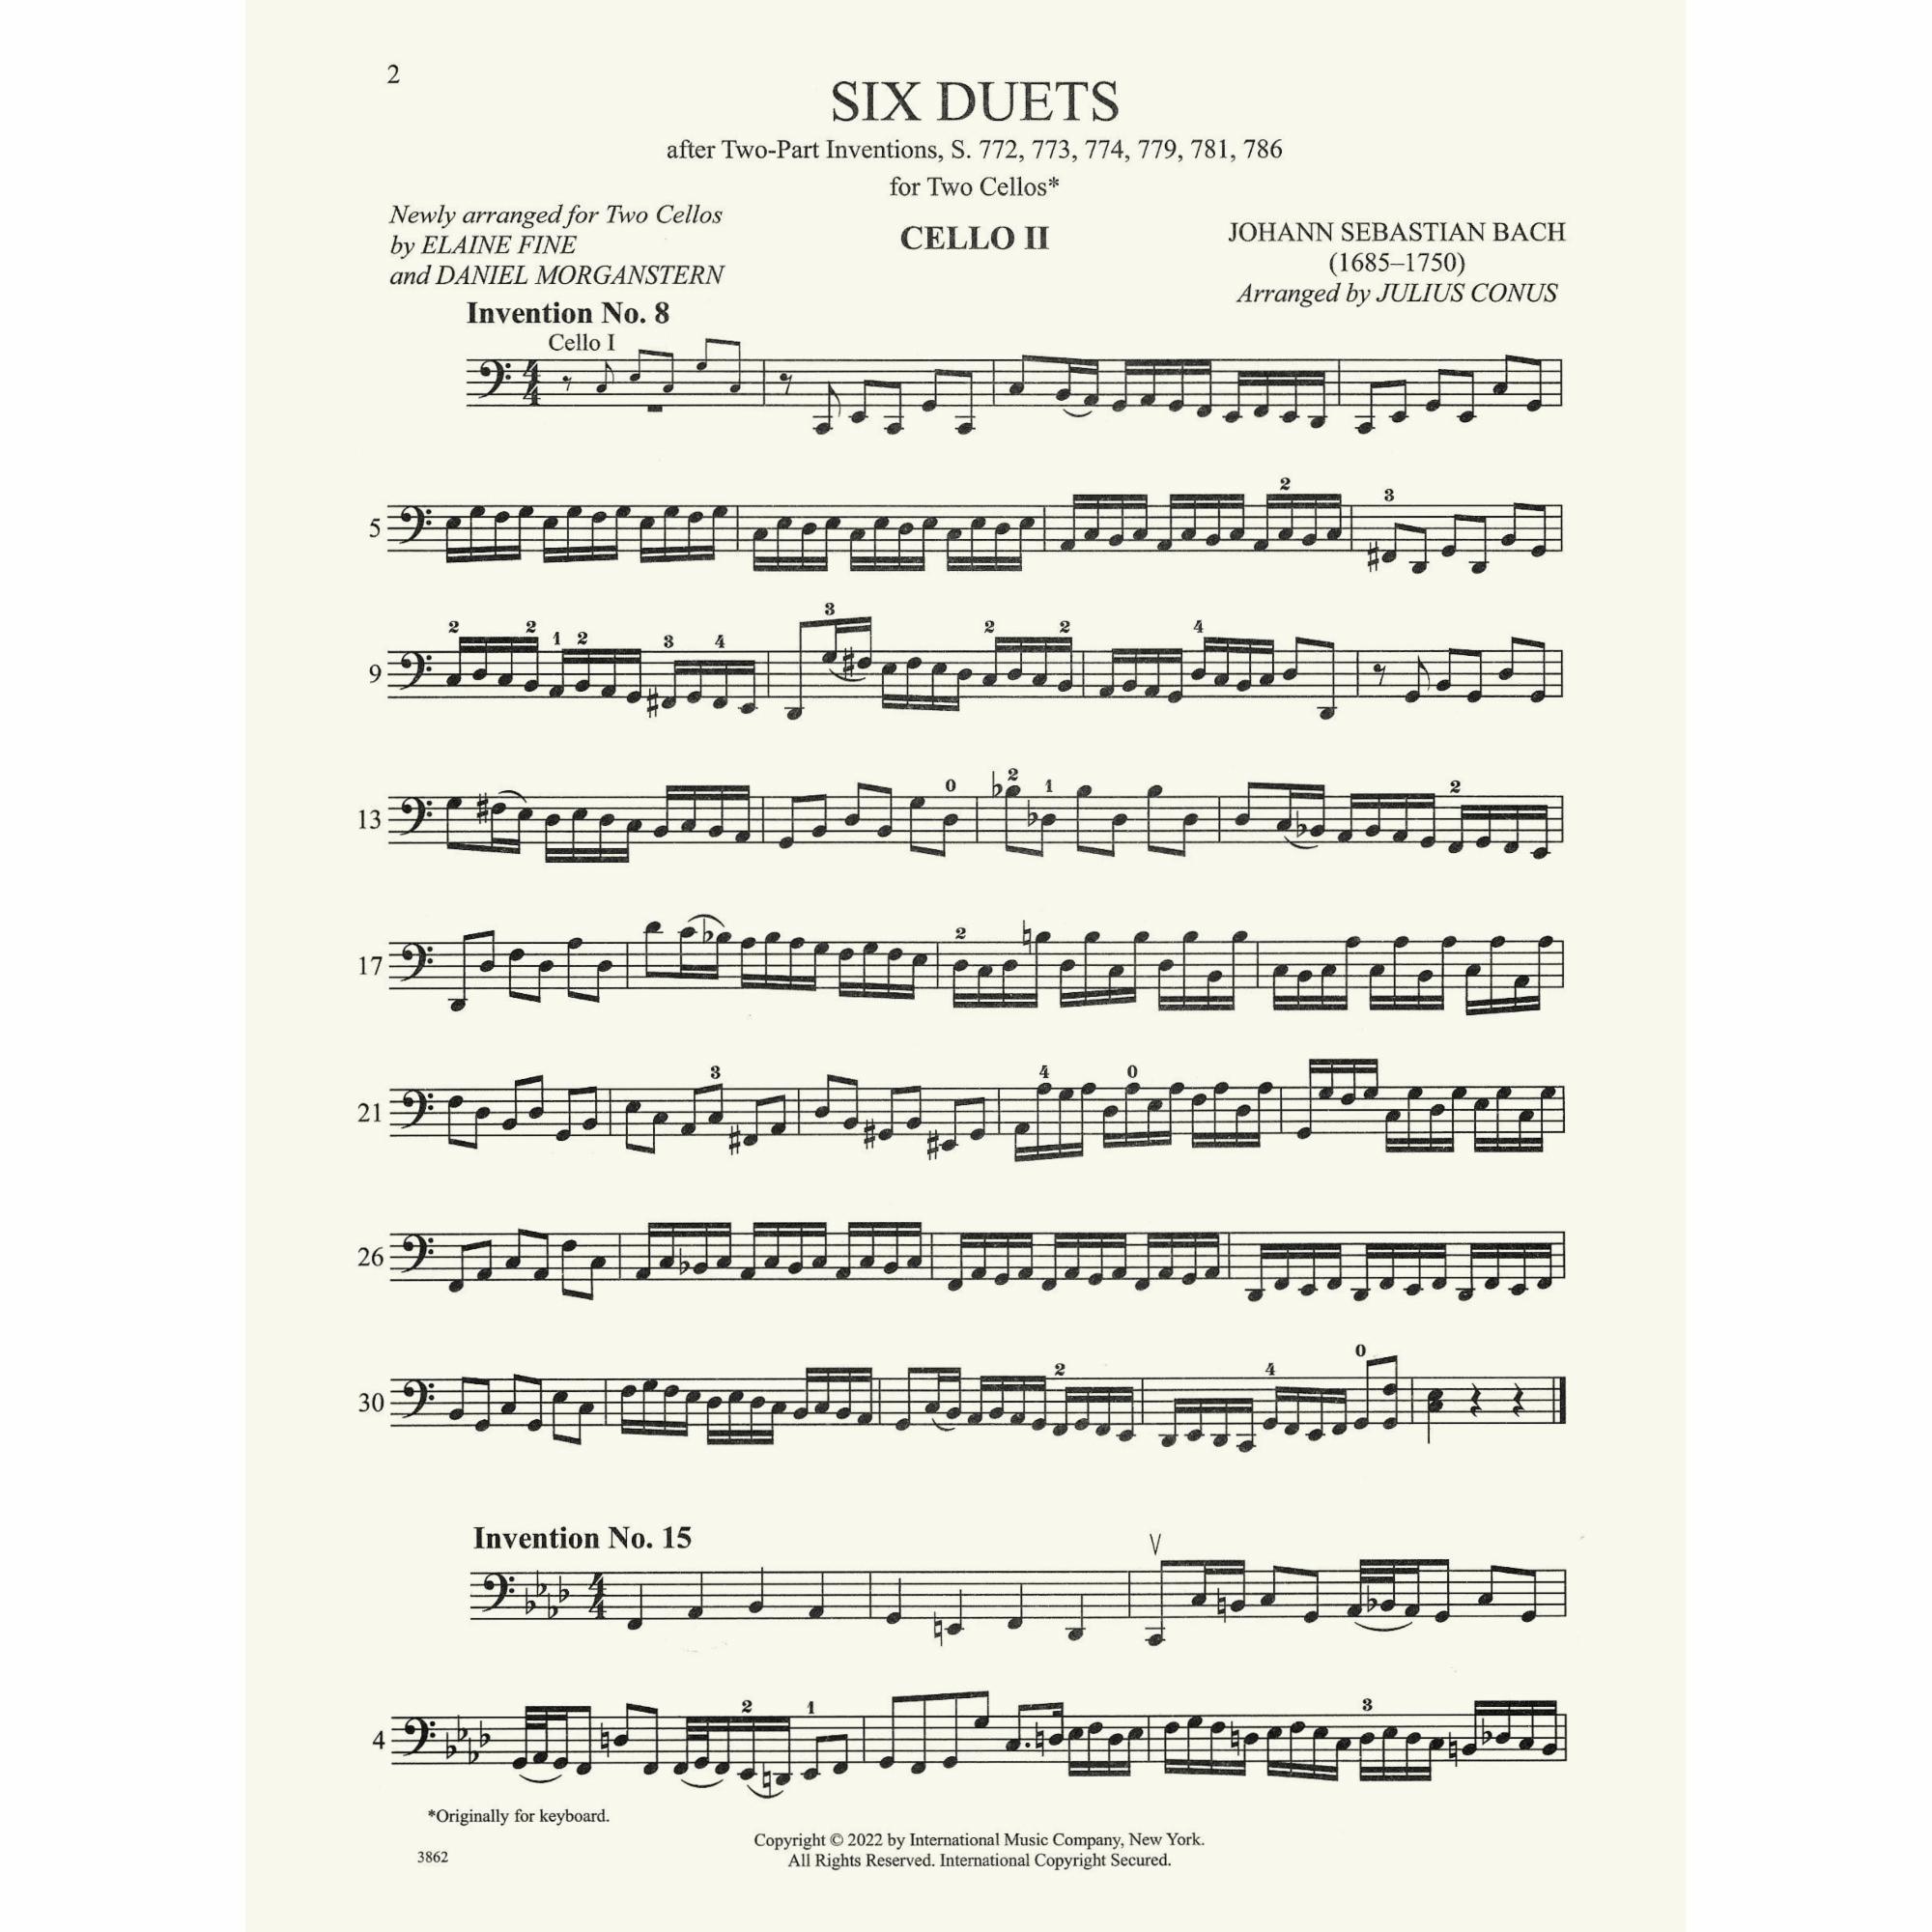 Sample: Cello II Part